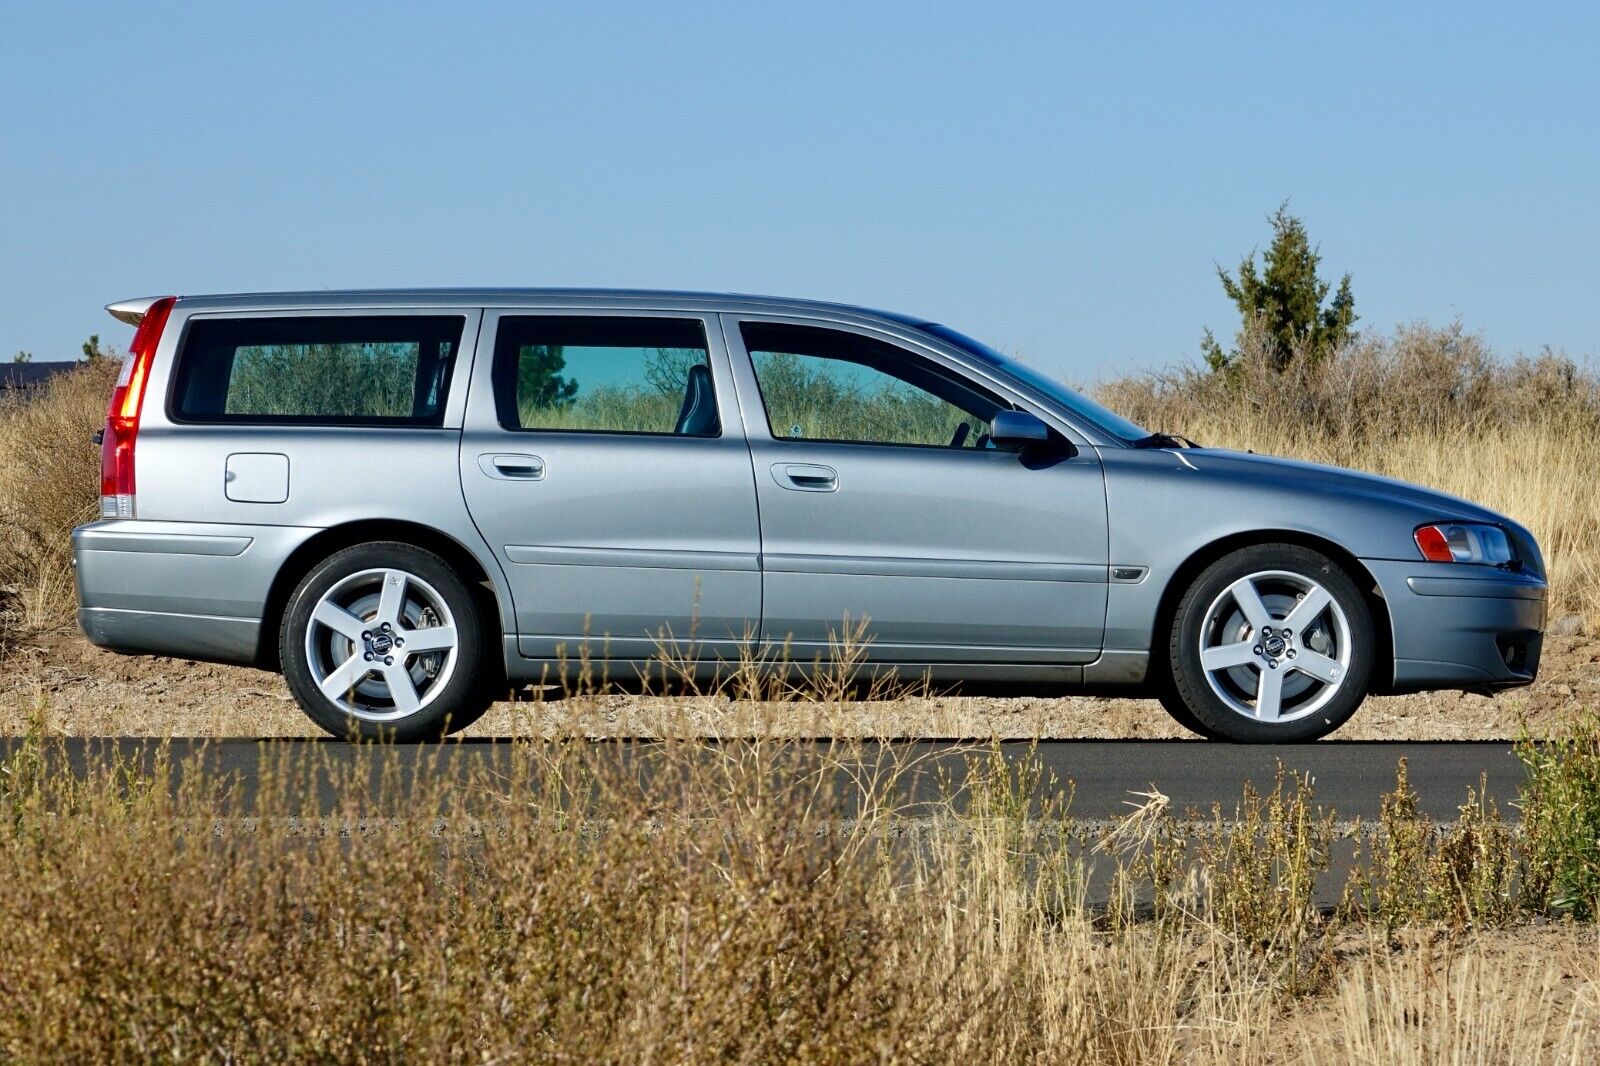 2006 Volvo V70 R Is a Sleeper the Whole Family Will Love - eBay Motors Blog